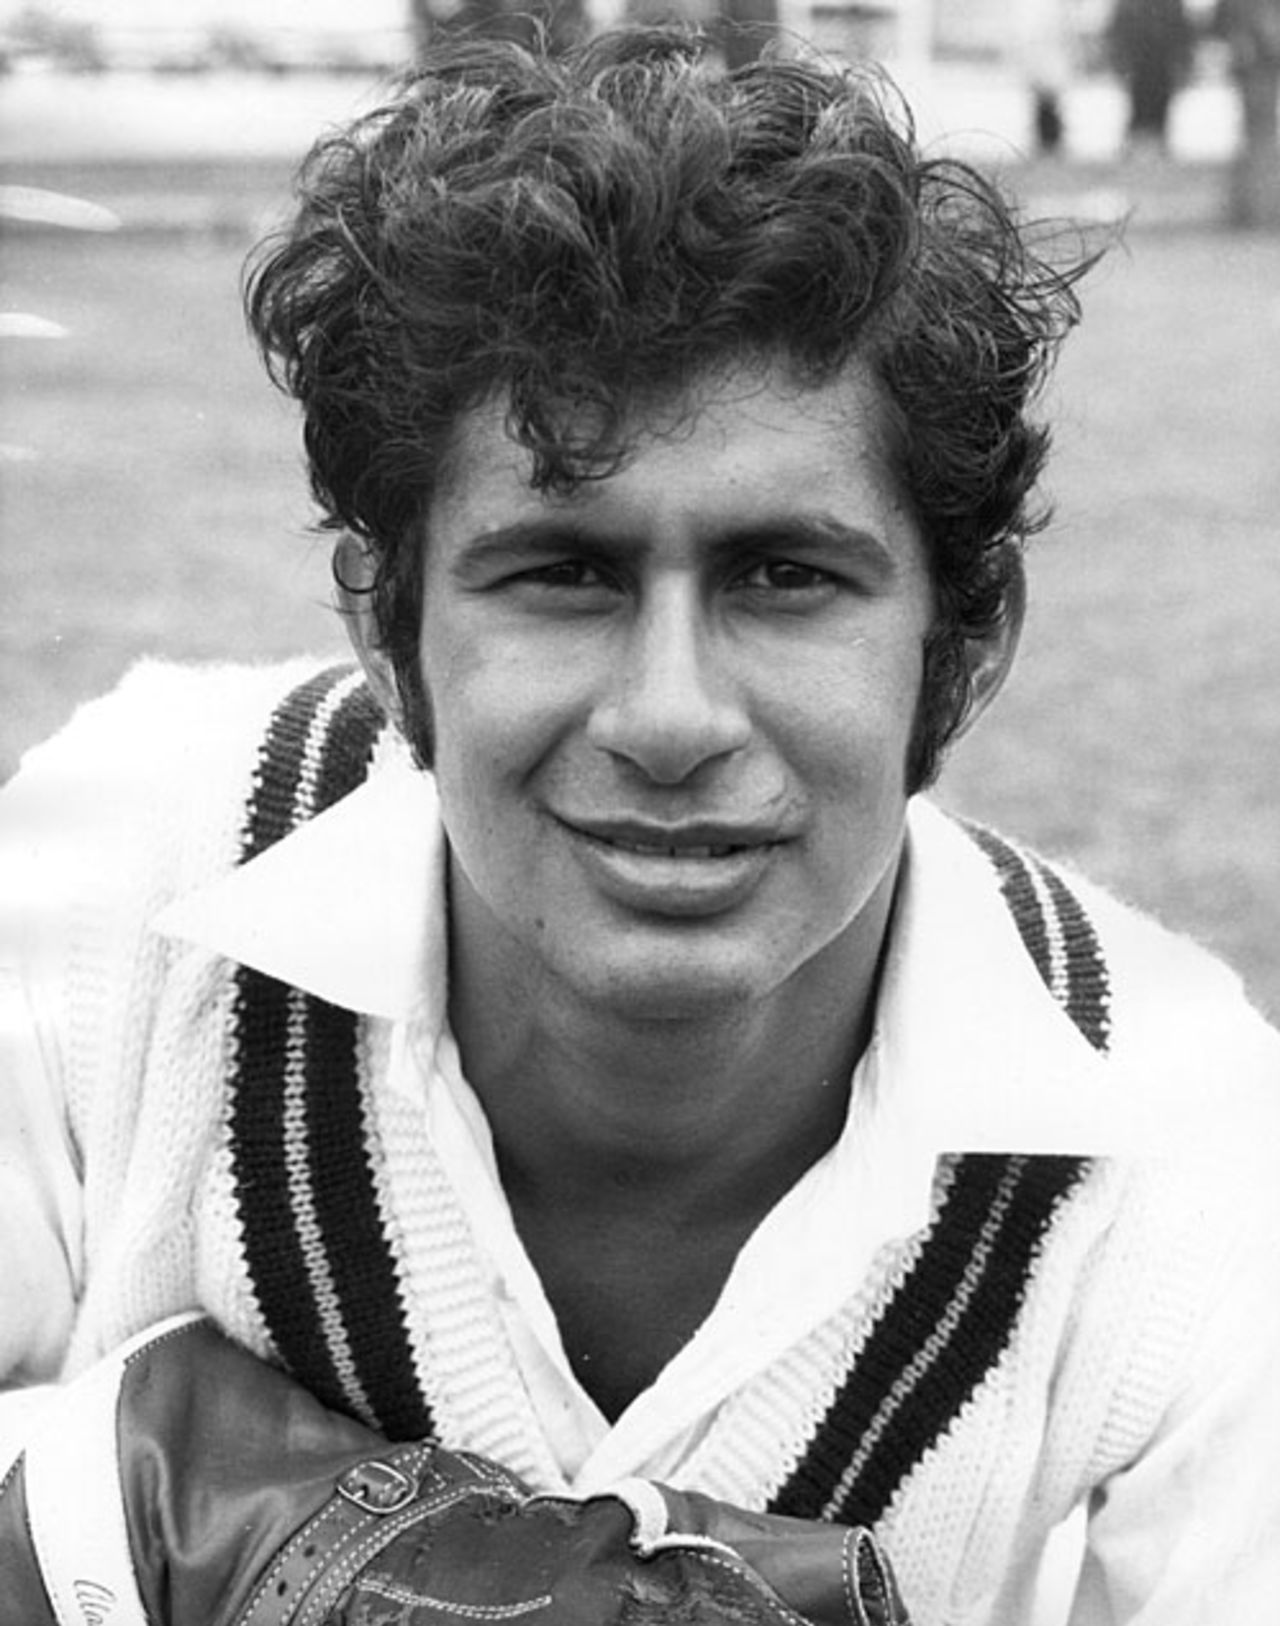 Wasim Bari, player portrait, June 1, 1979